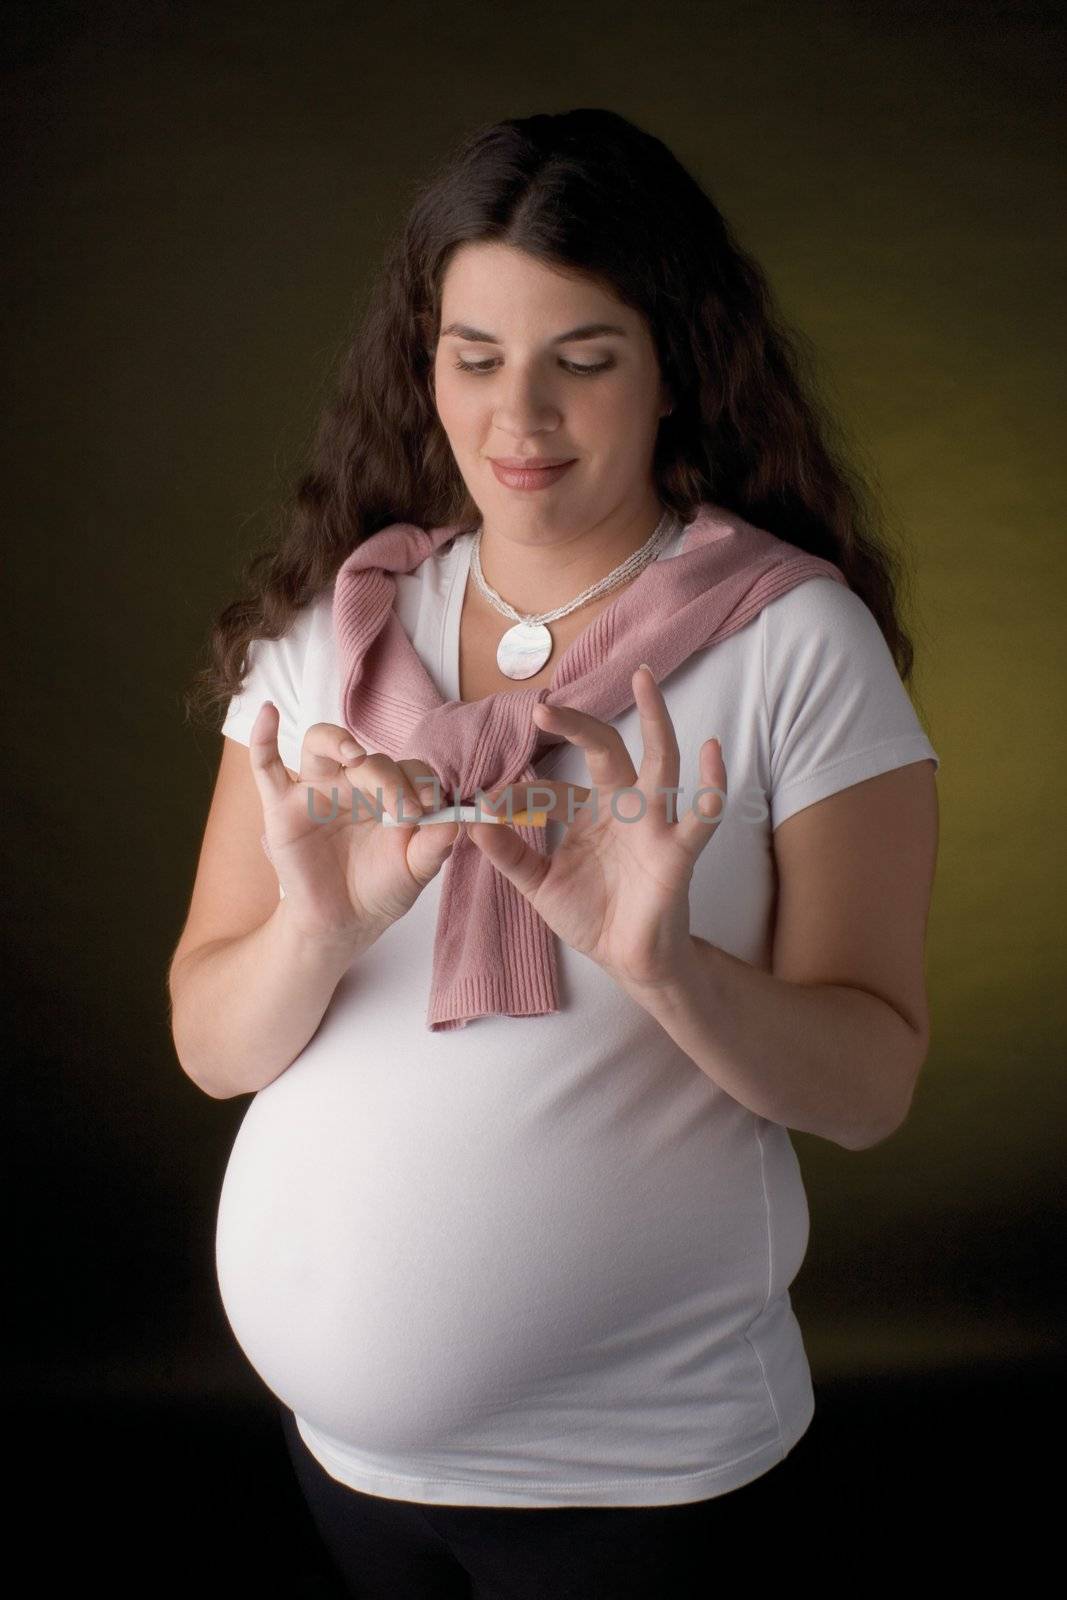 Pregnant women holding a cigarette by mypstudio